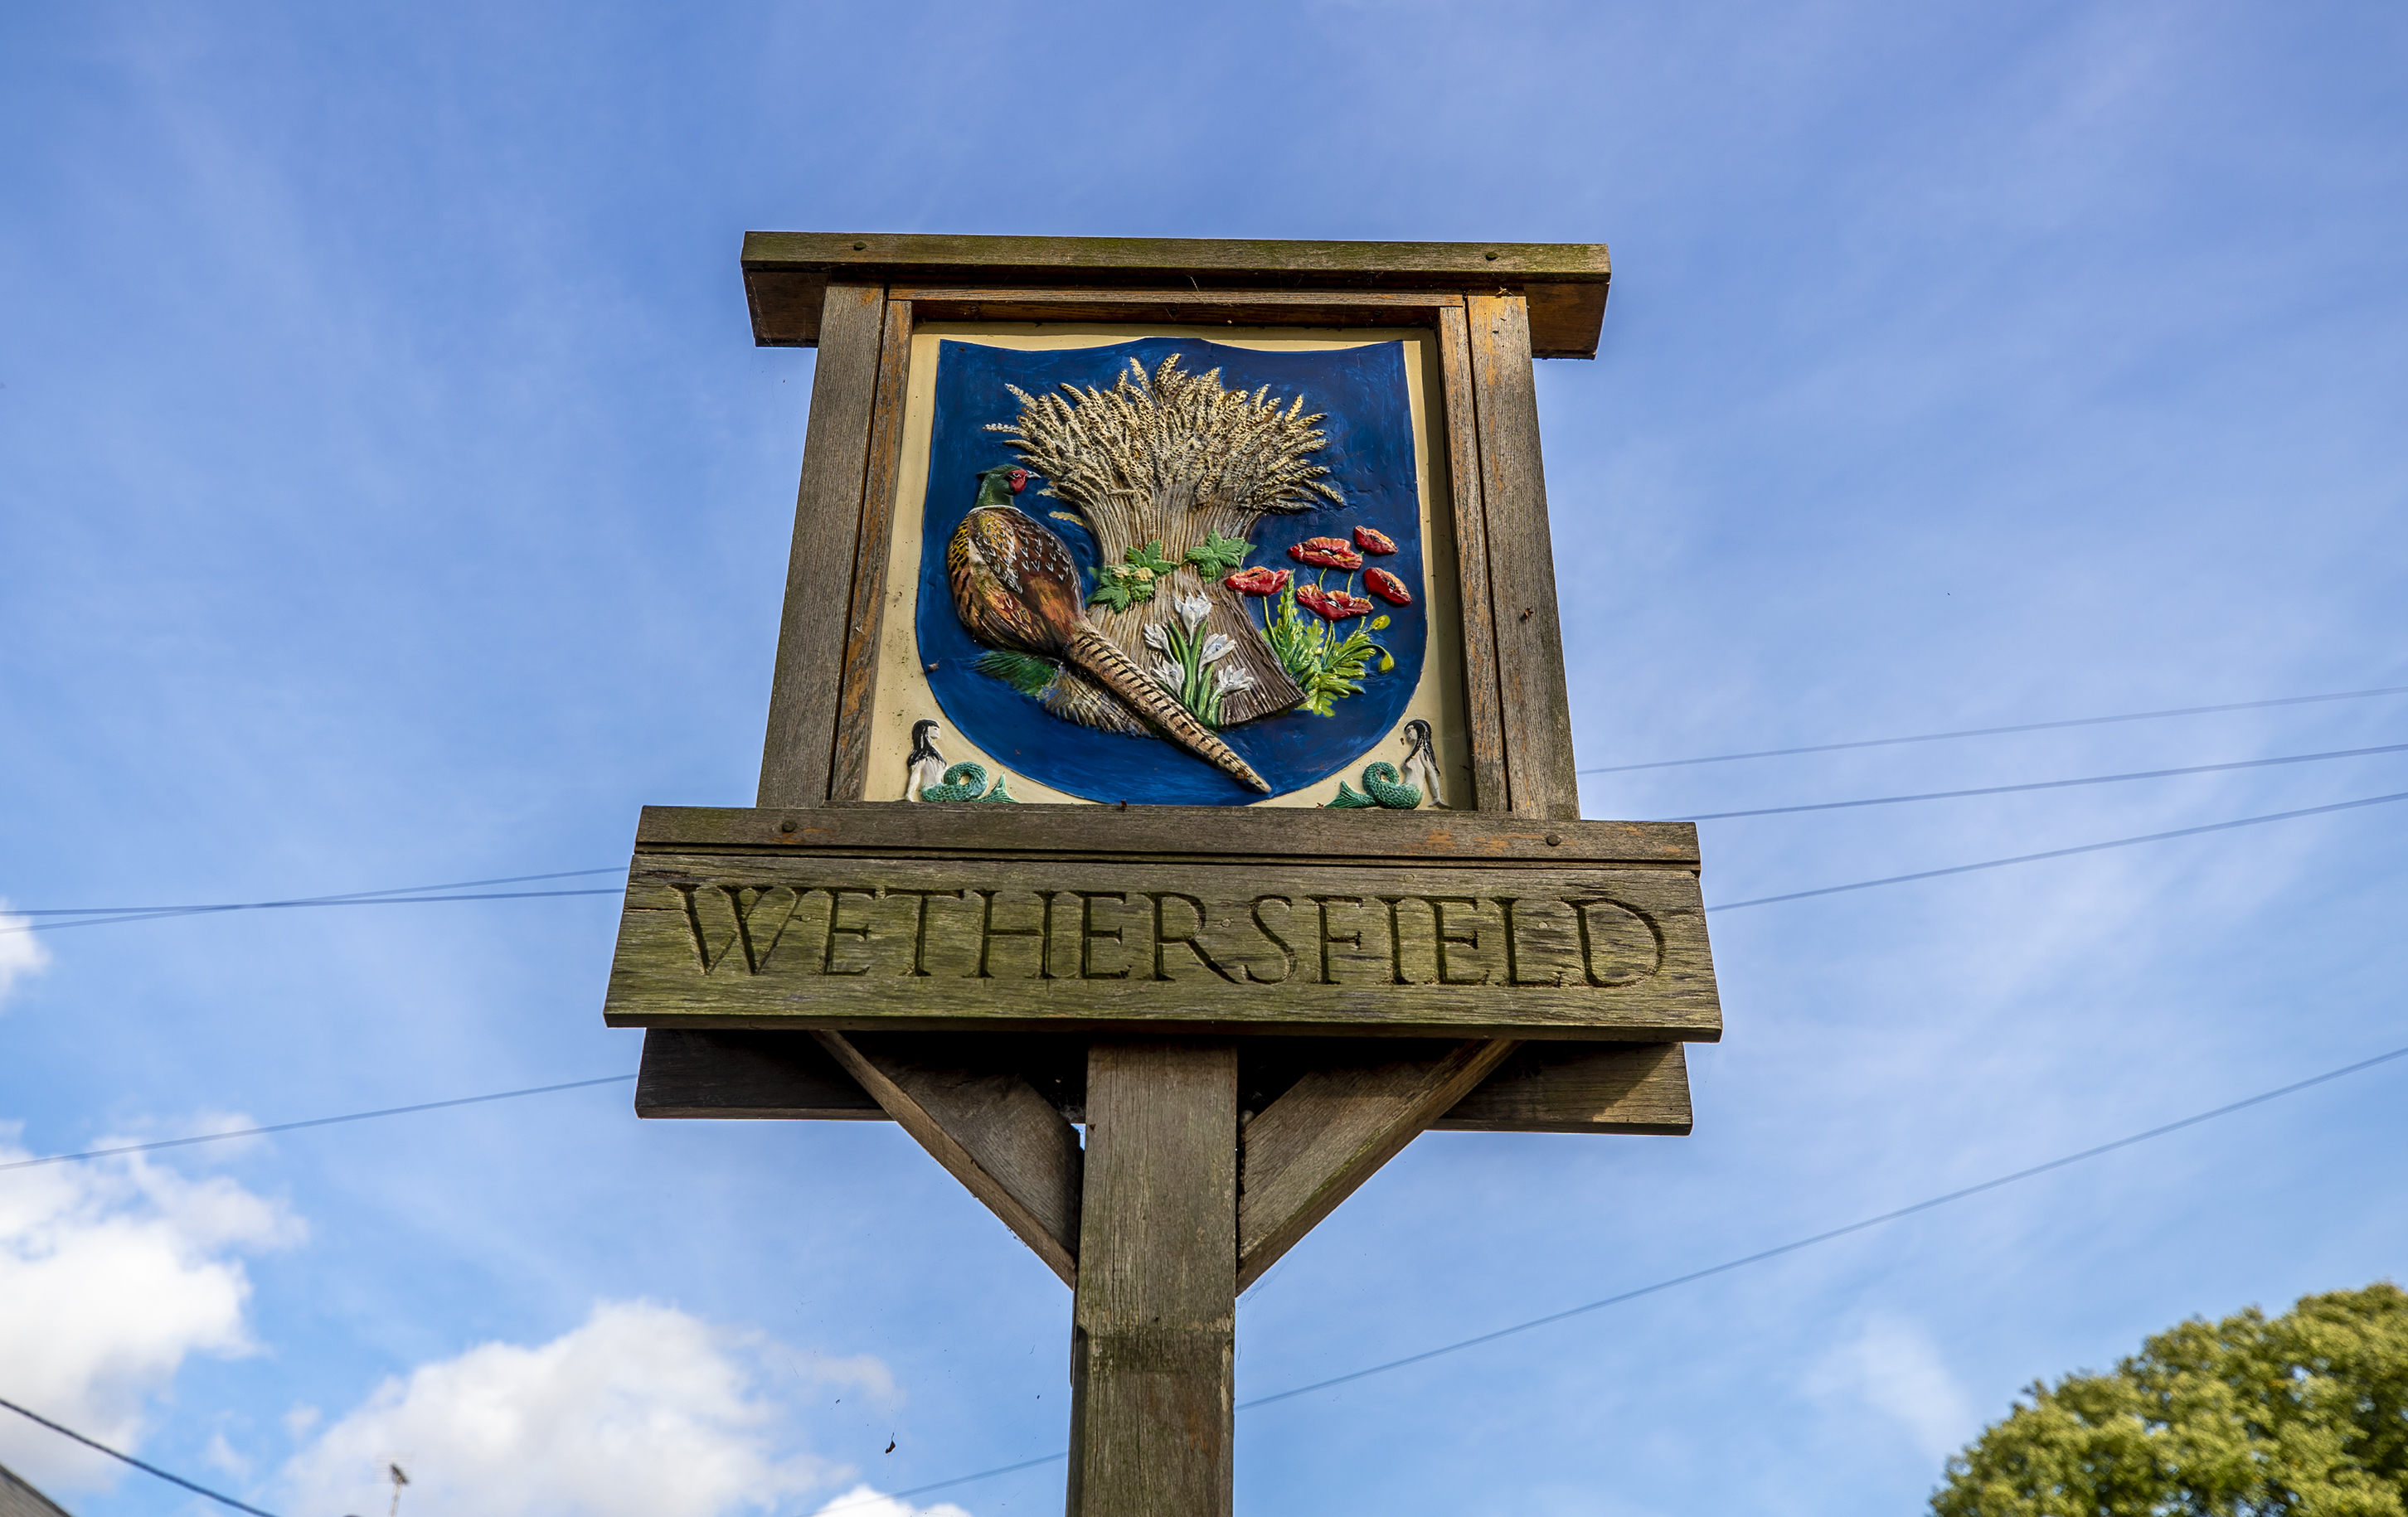 Wethersfield village sign - Image